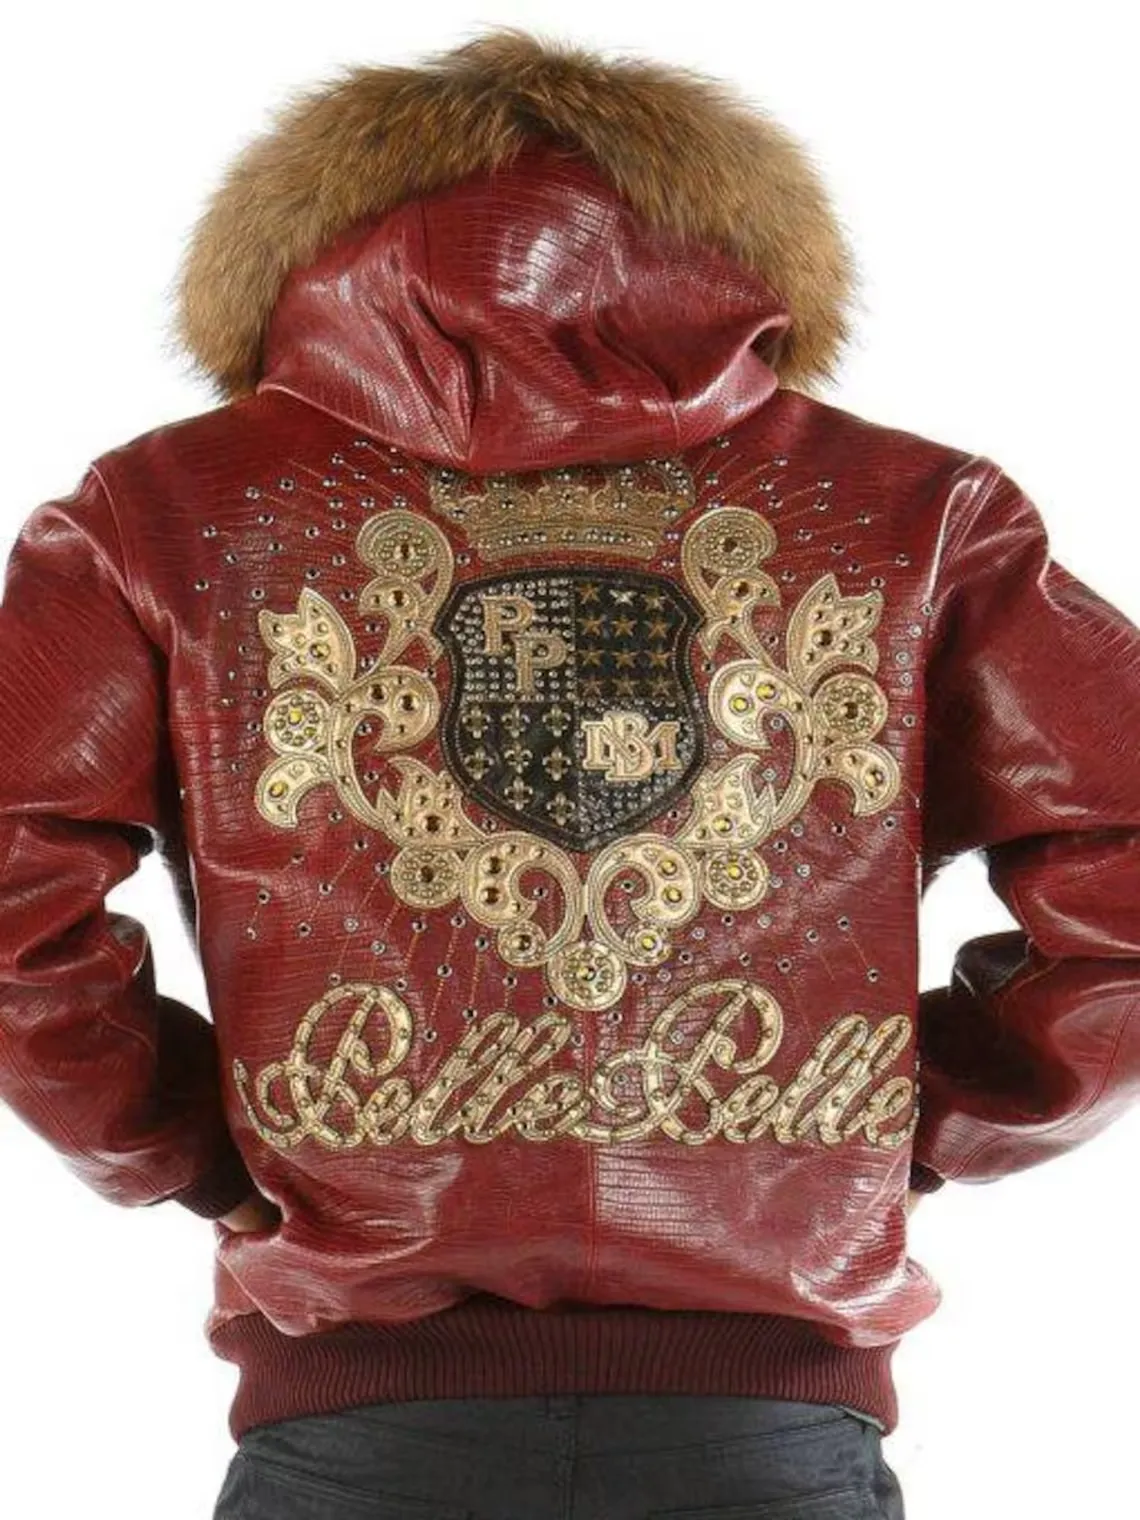 The Crown Pelle Pelle Crest Maroon Leather Jacket